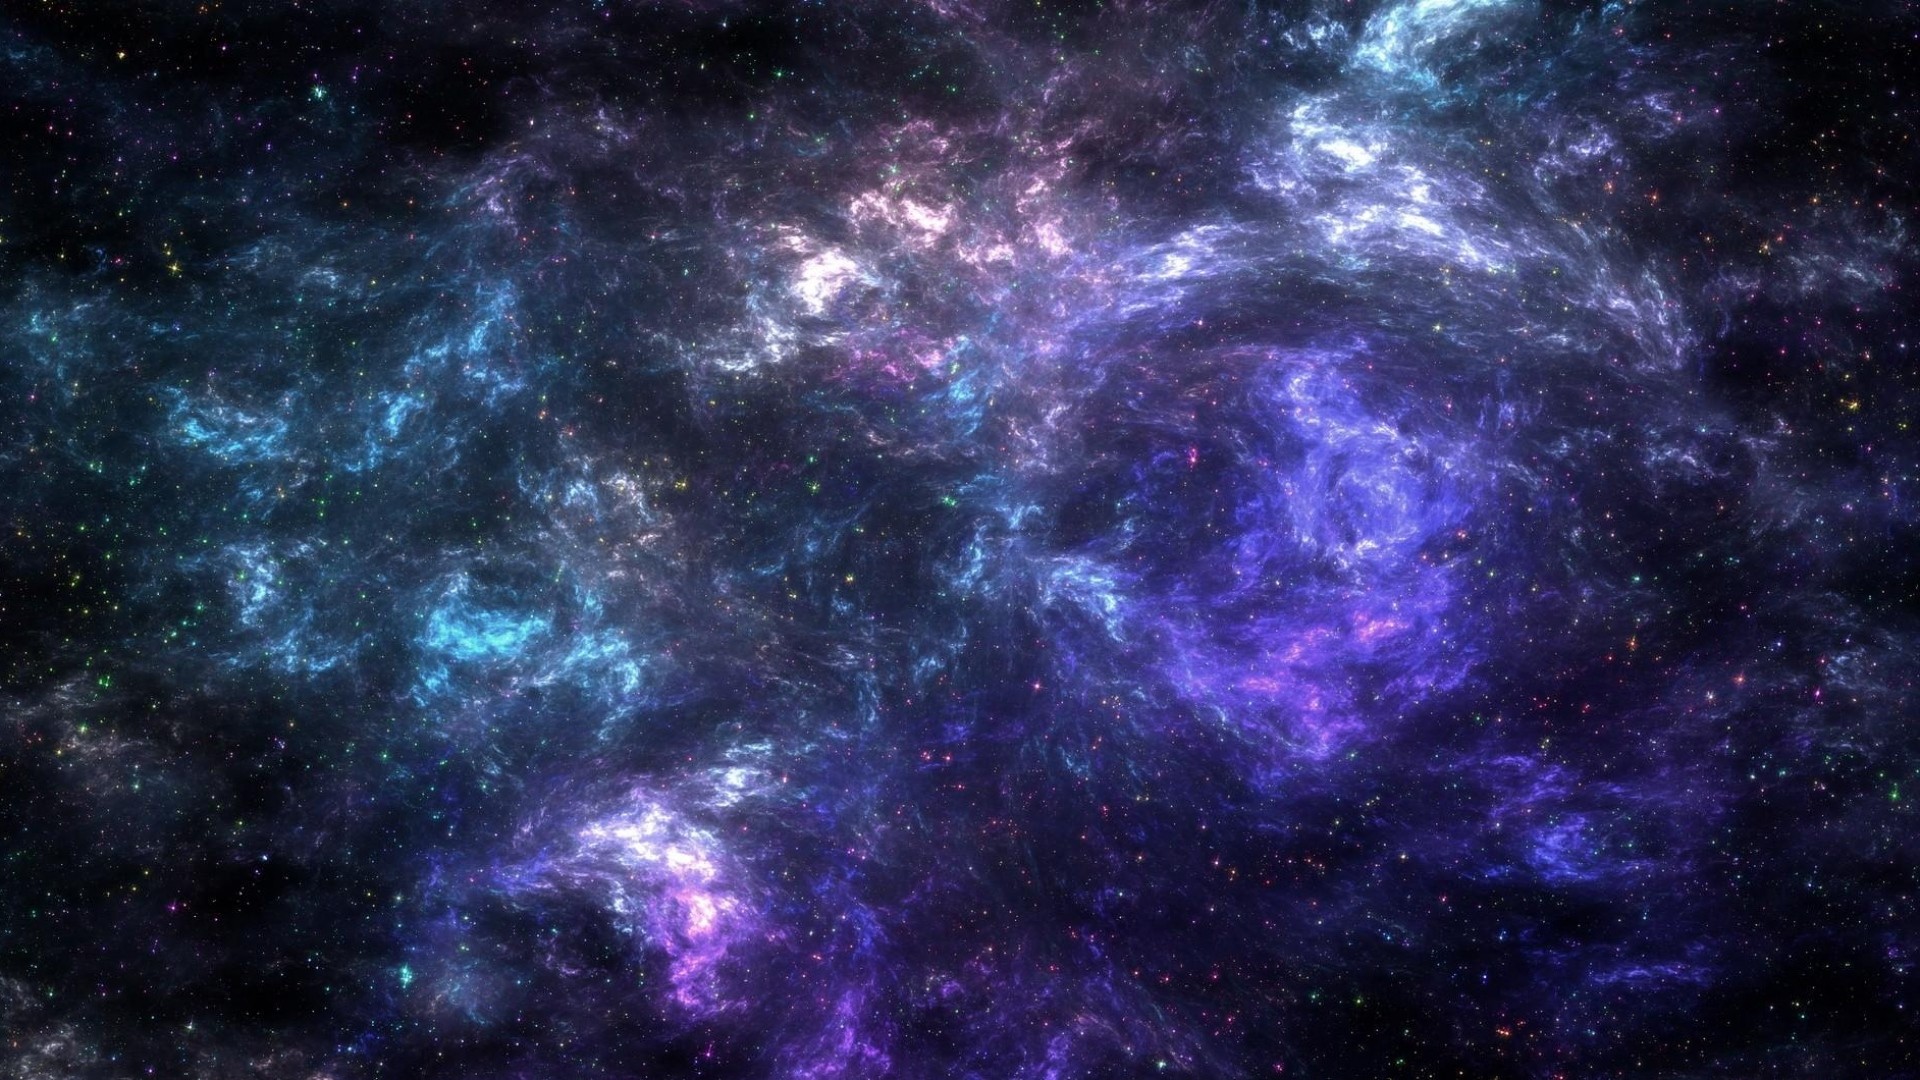 Galaxy HD Wallpaper 1080p Image